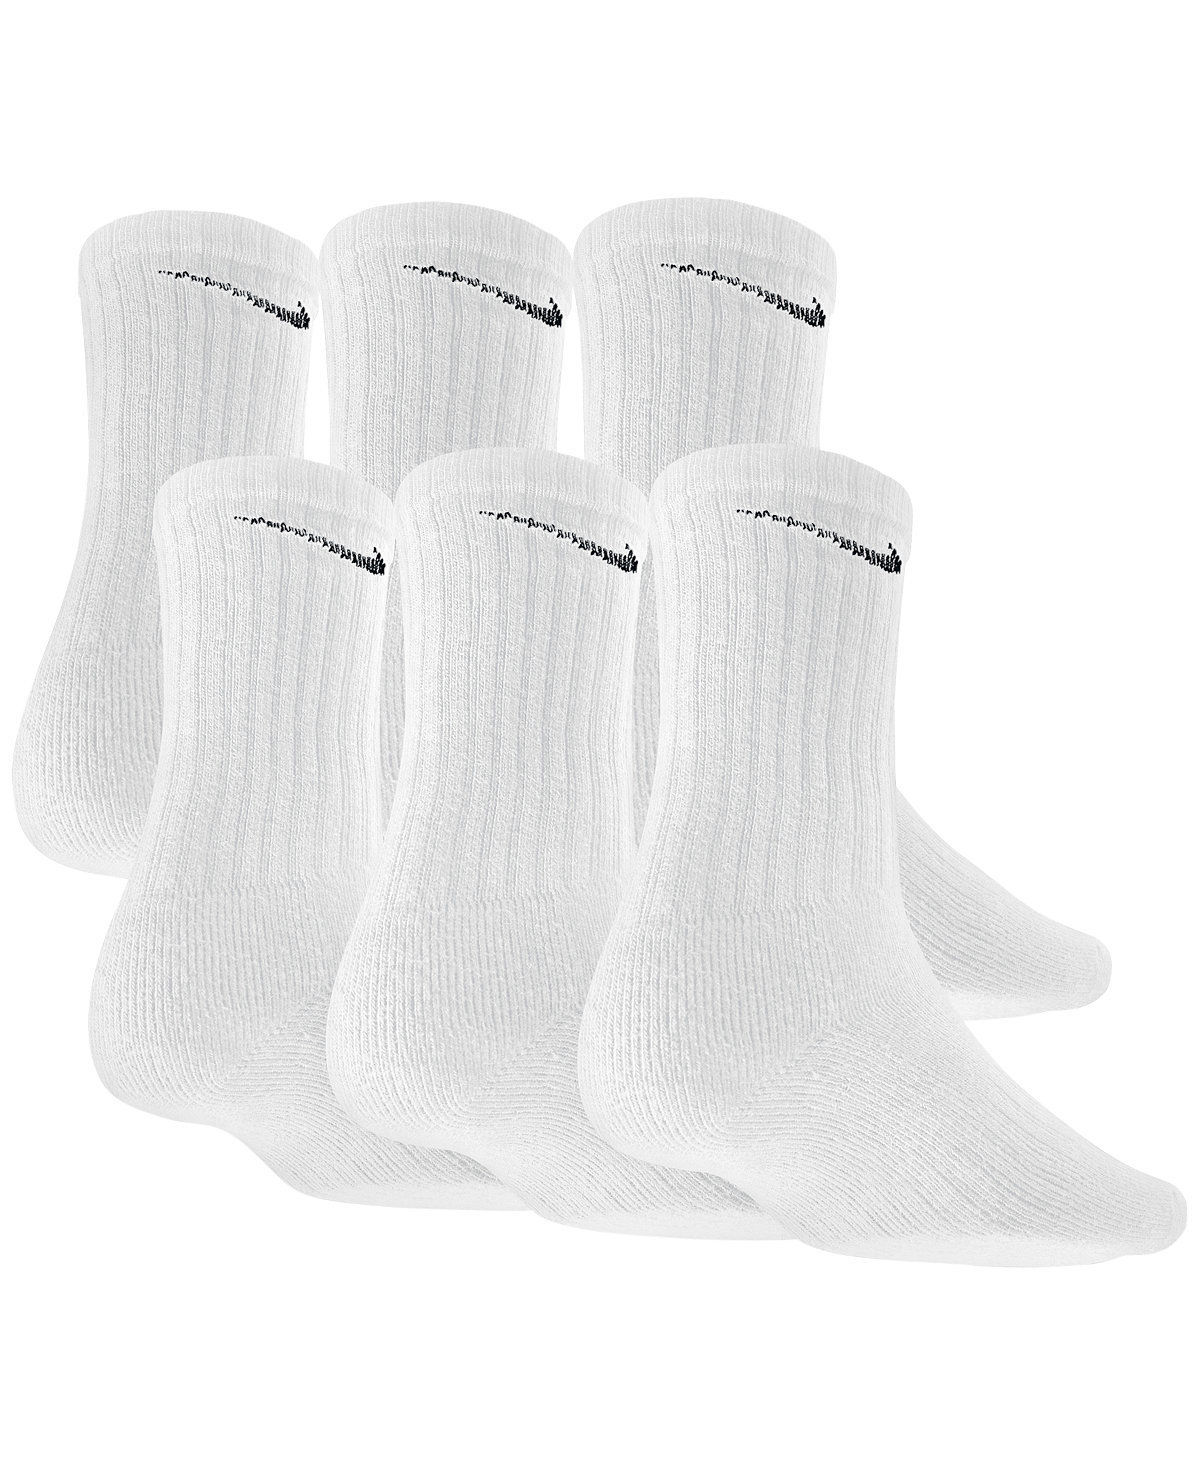 Nike Men's Cotton Cushion Crew Socks 6-Pack - White